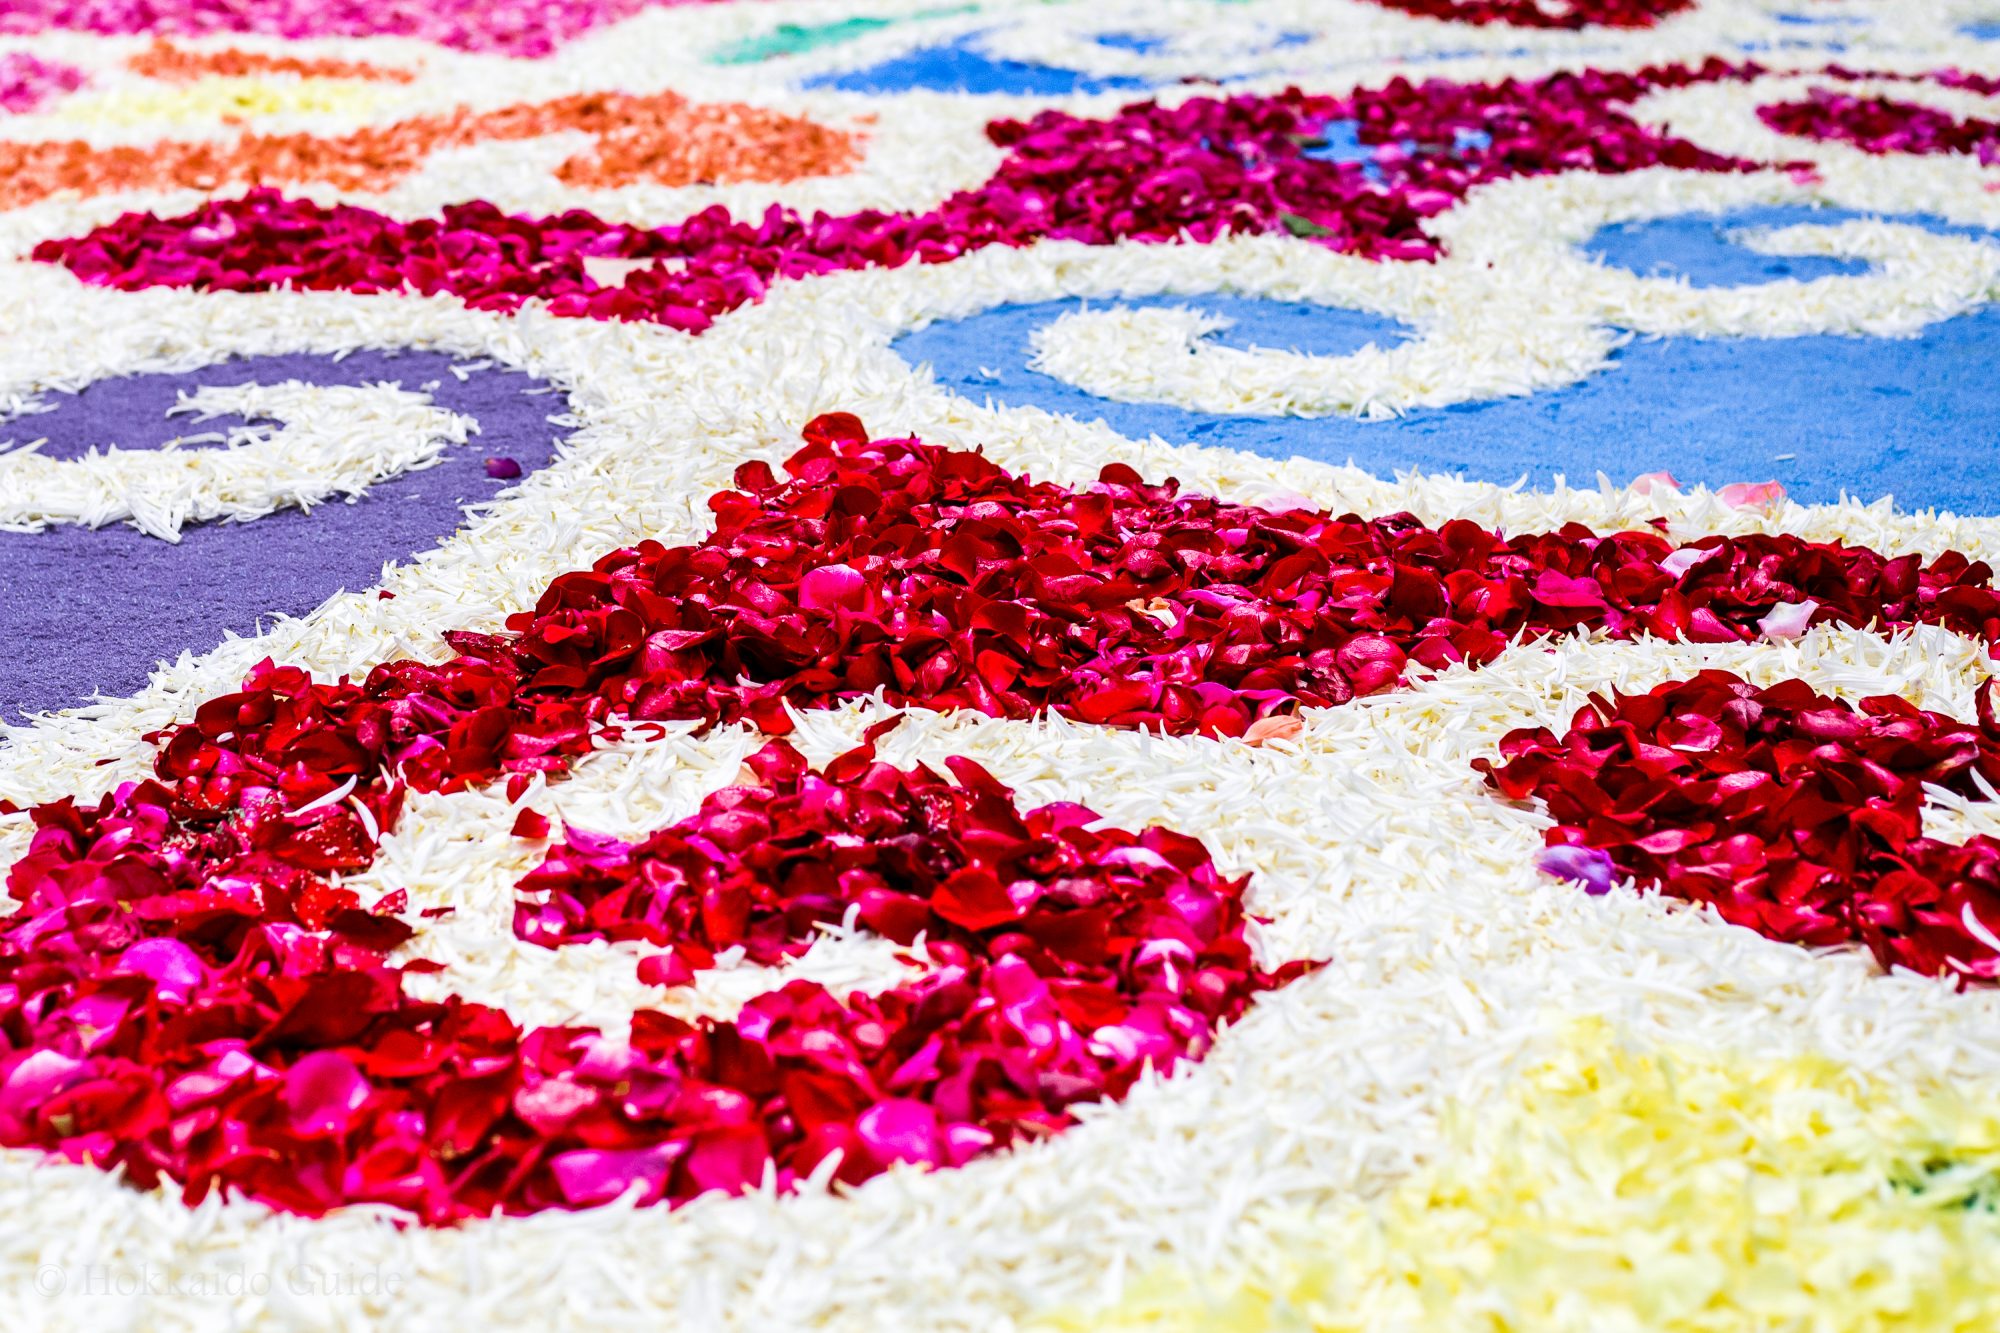 Sapporo Flower Carpet close up